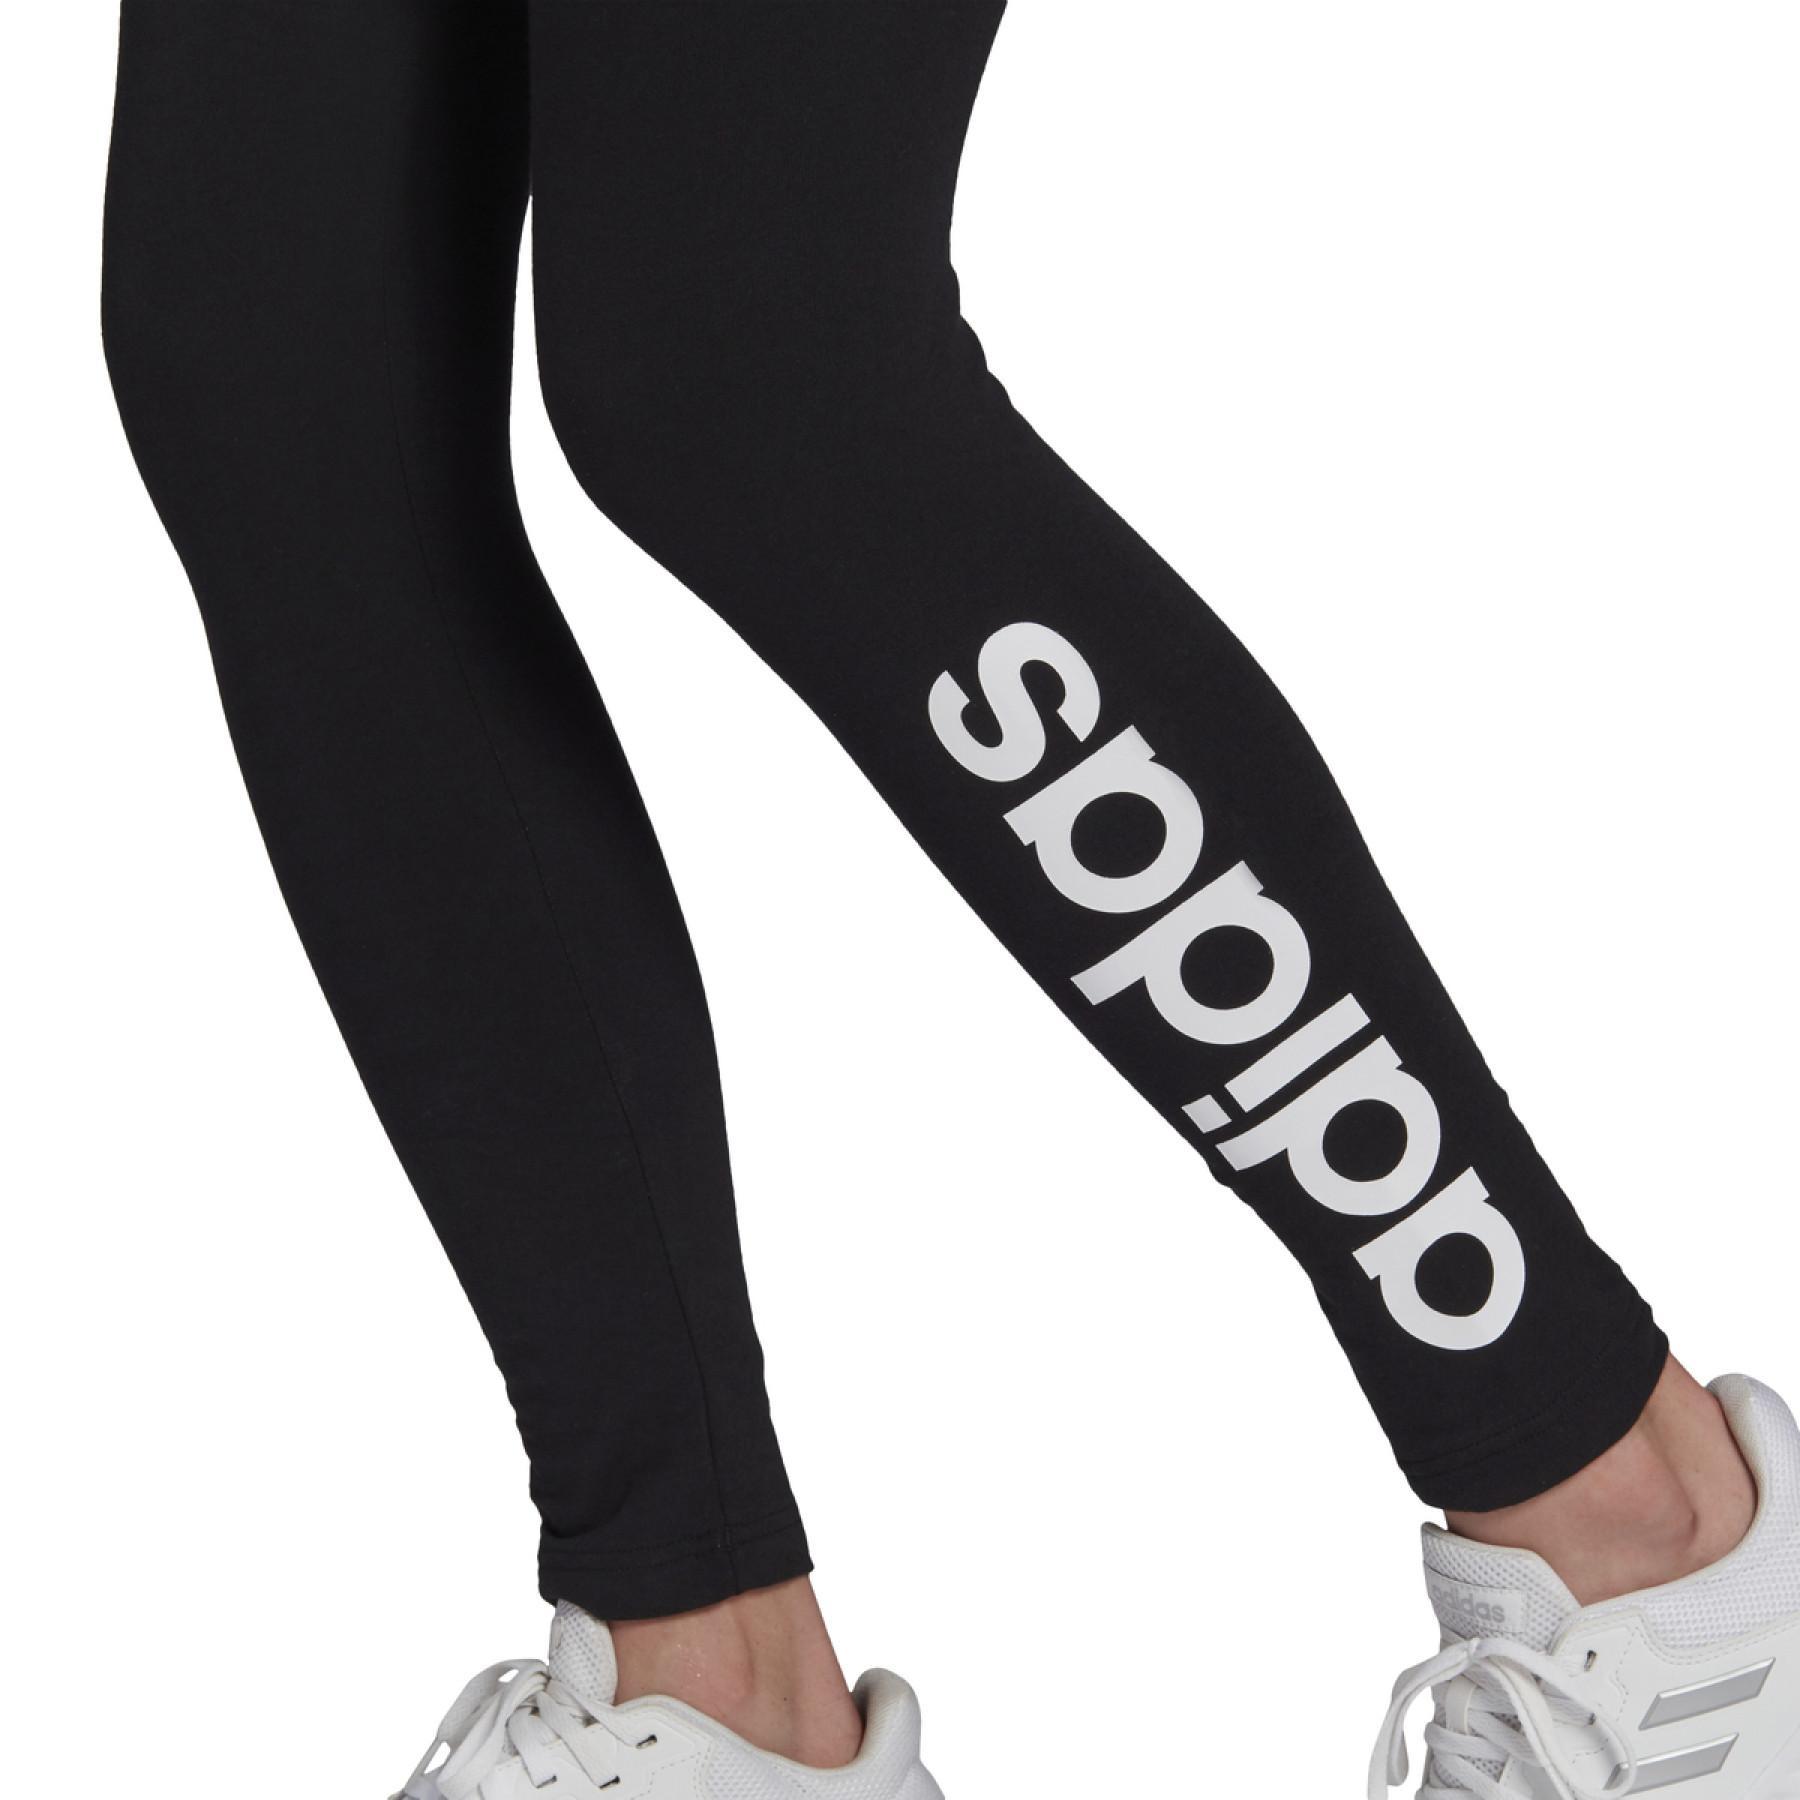 Baselayers - waisted leggings adidas Essentials Logo - Women's high -  collaboration Jeremy Scott x adidas - Slocog wear - Textile